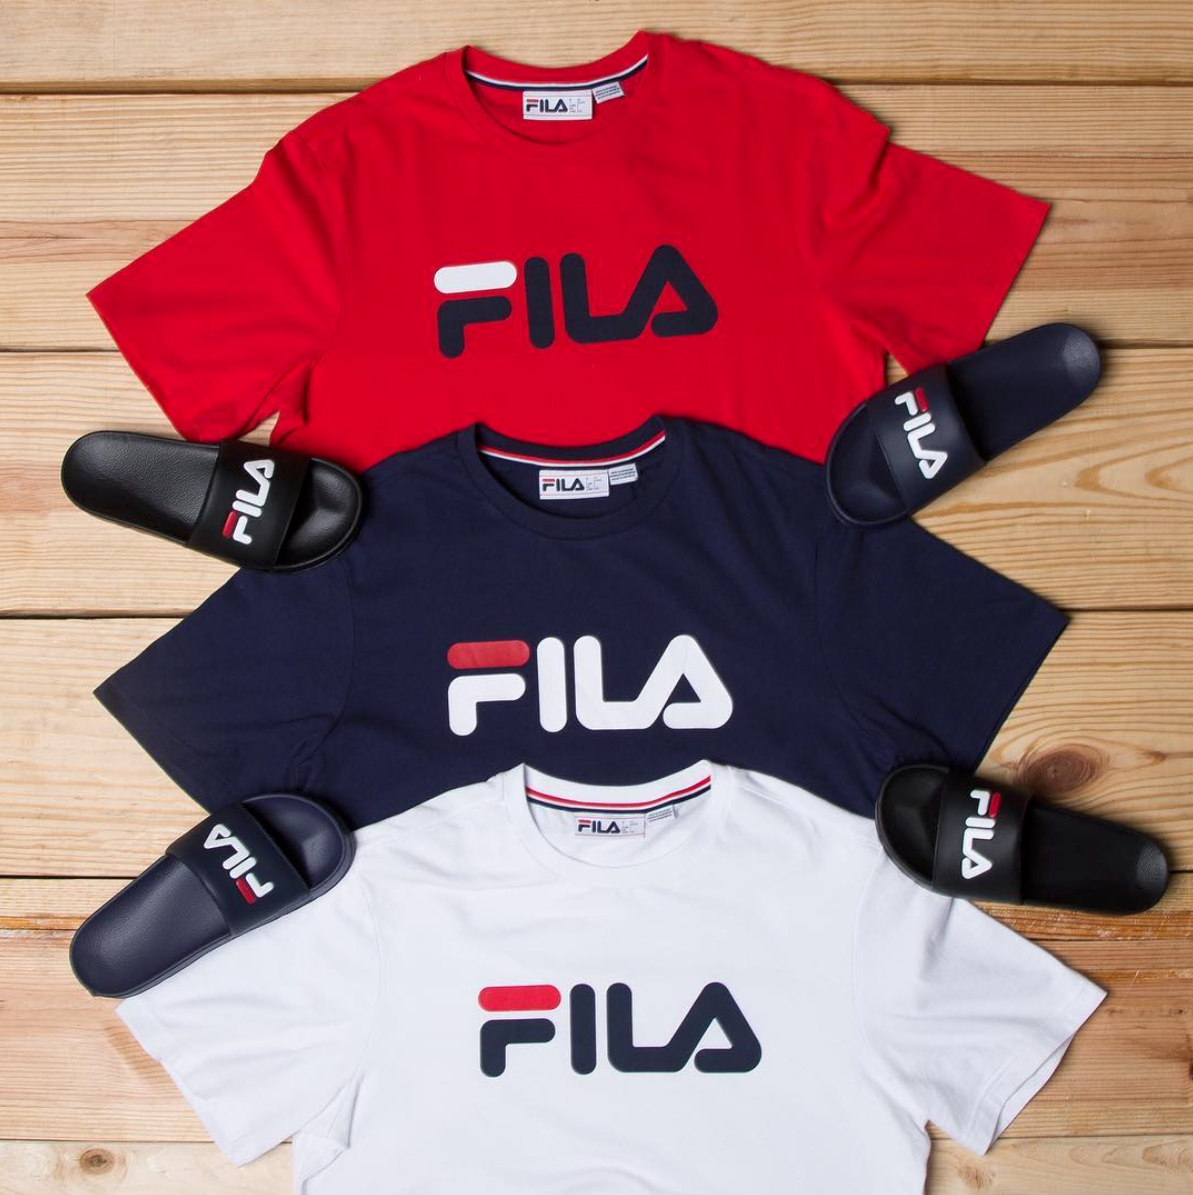 fila-slides-and-shirts